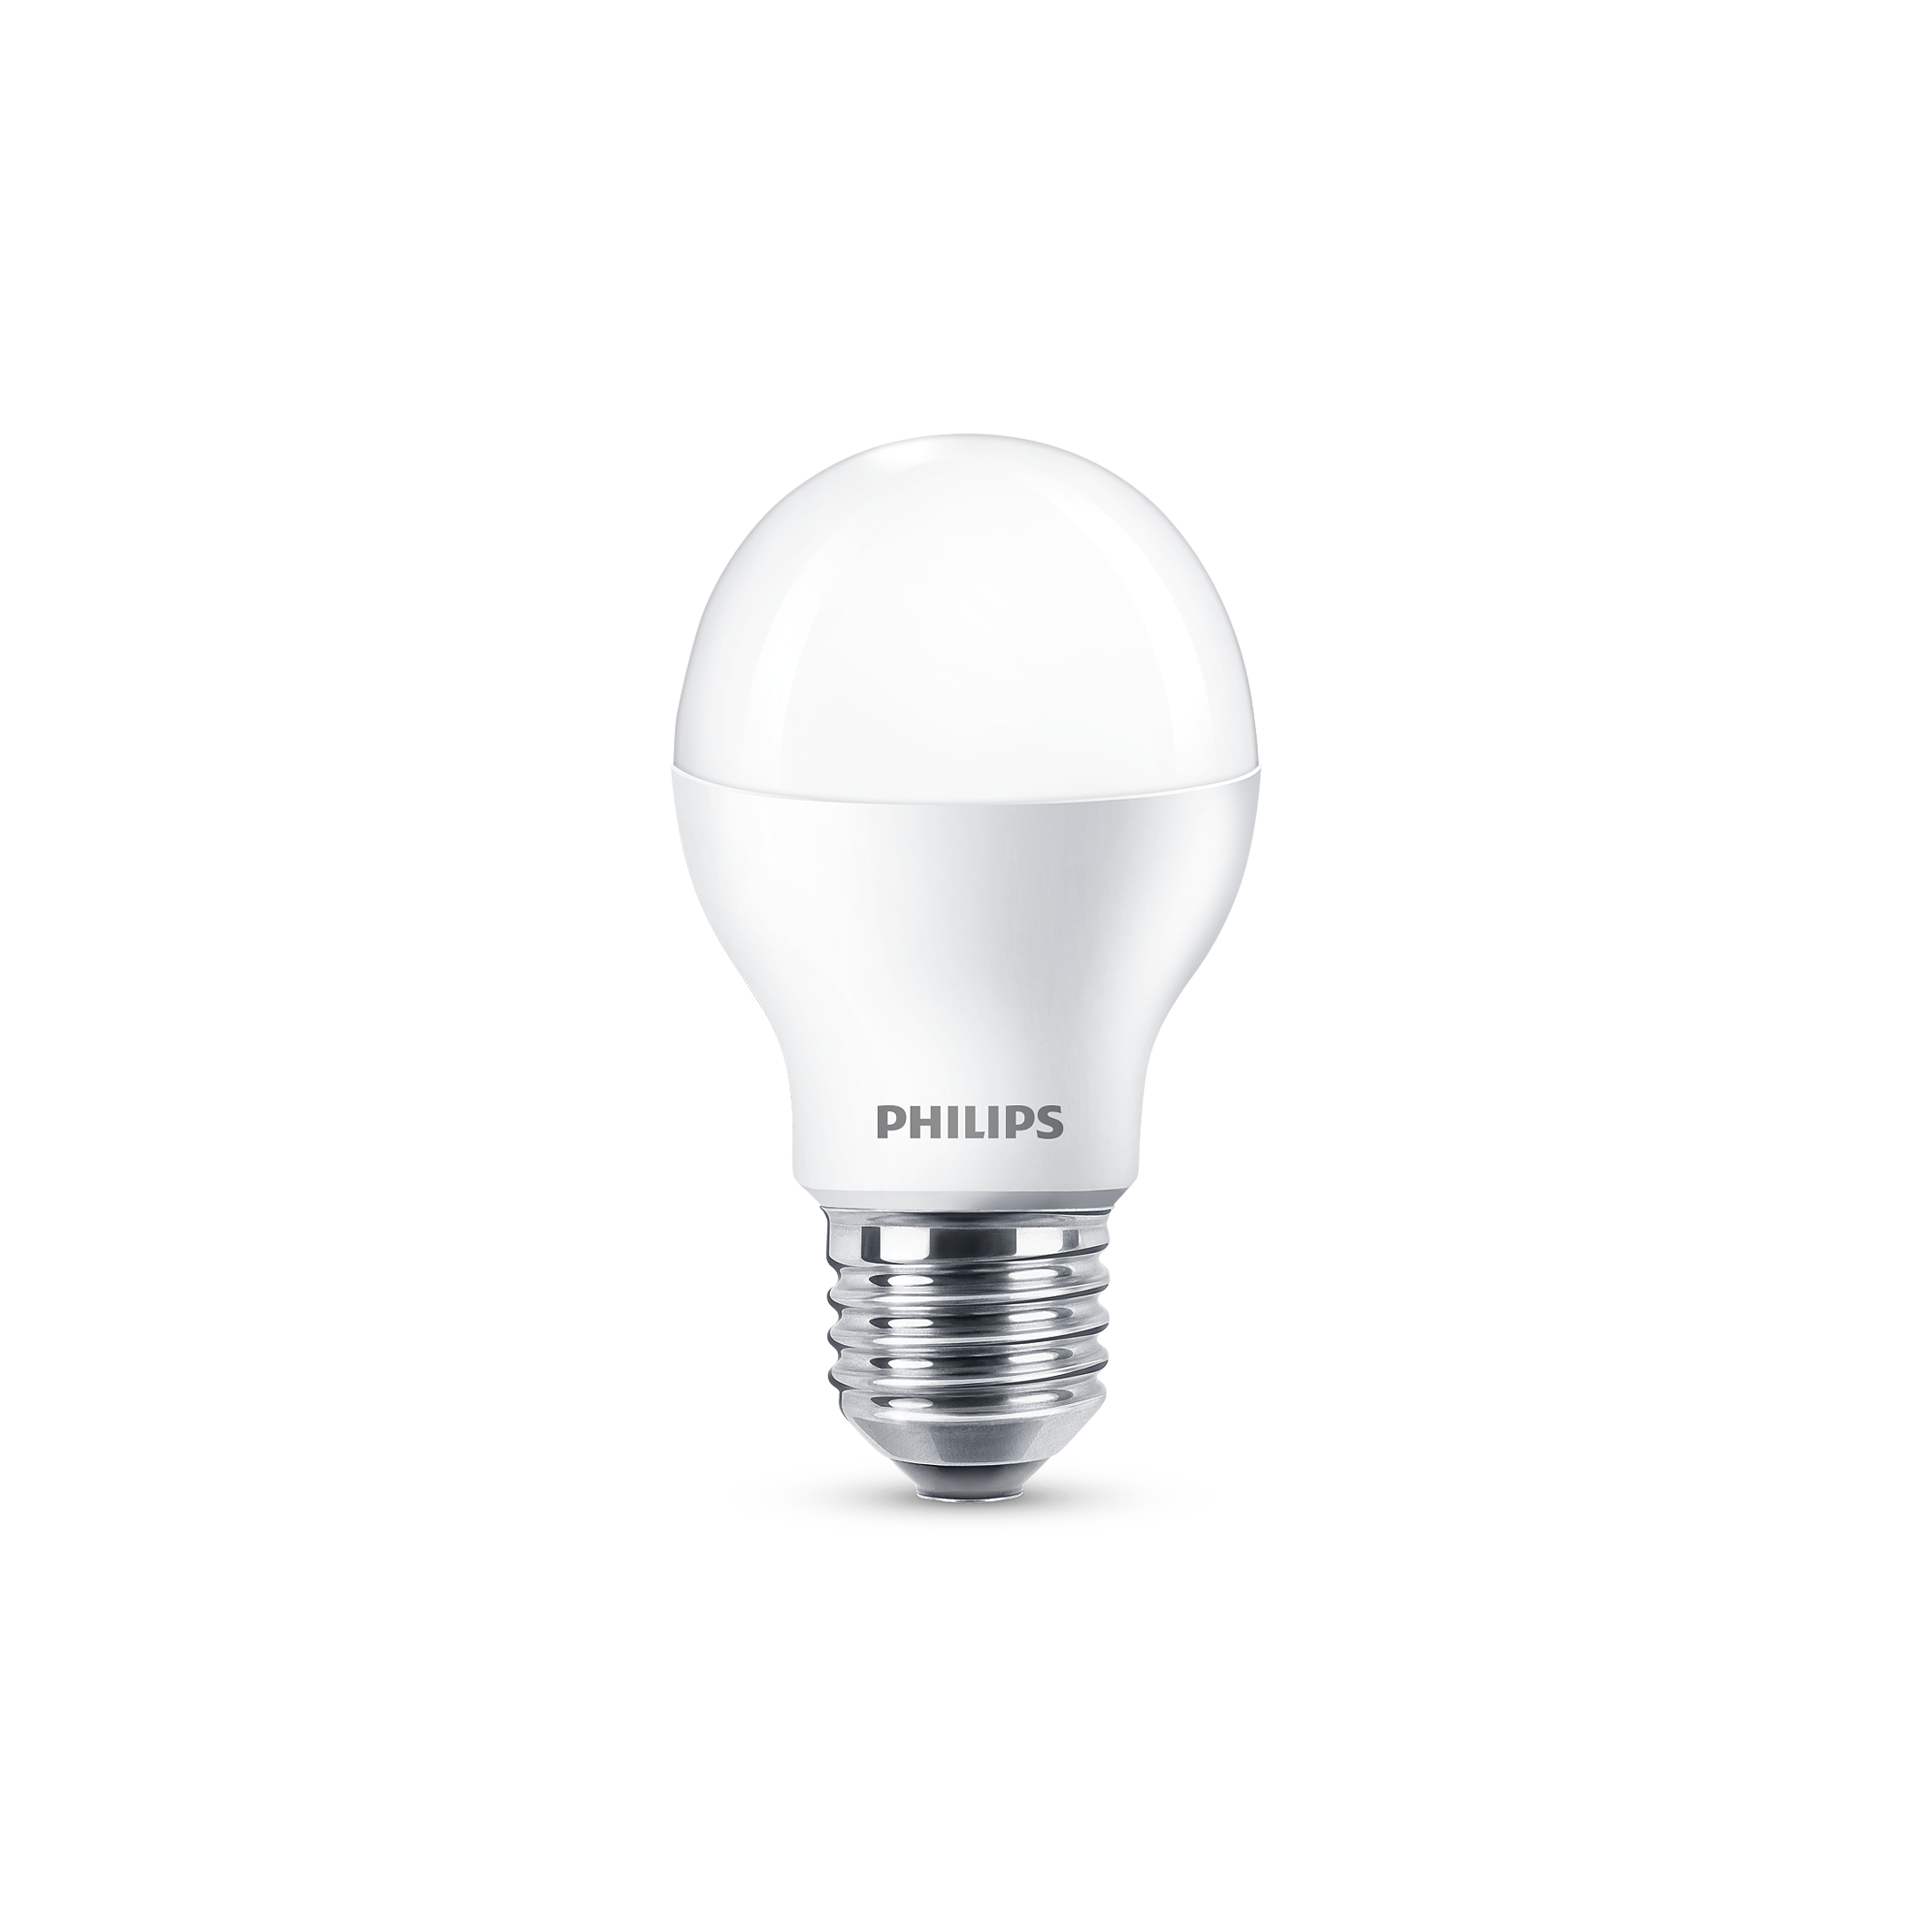 Essential LED bulbs